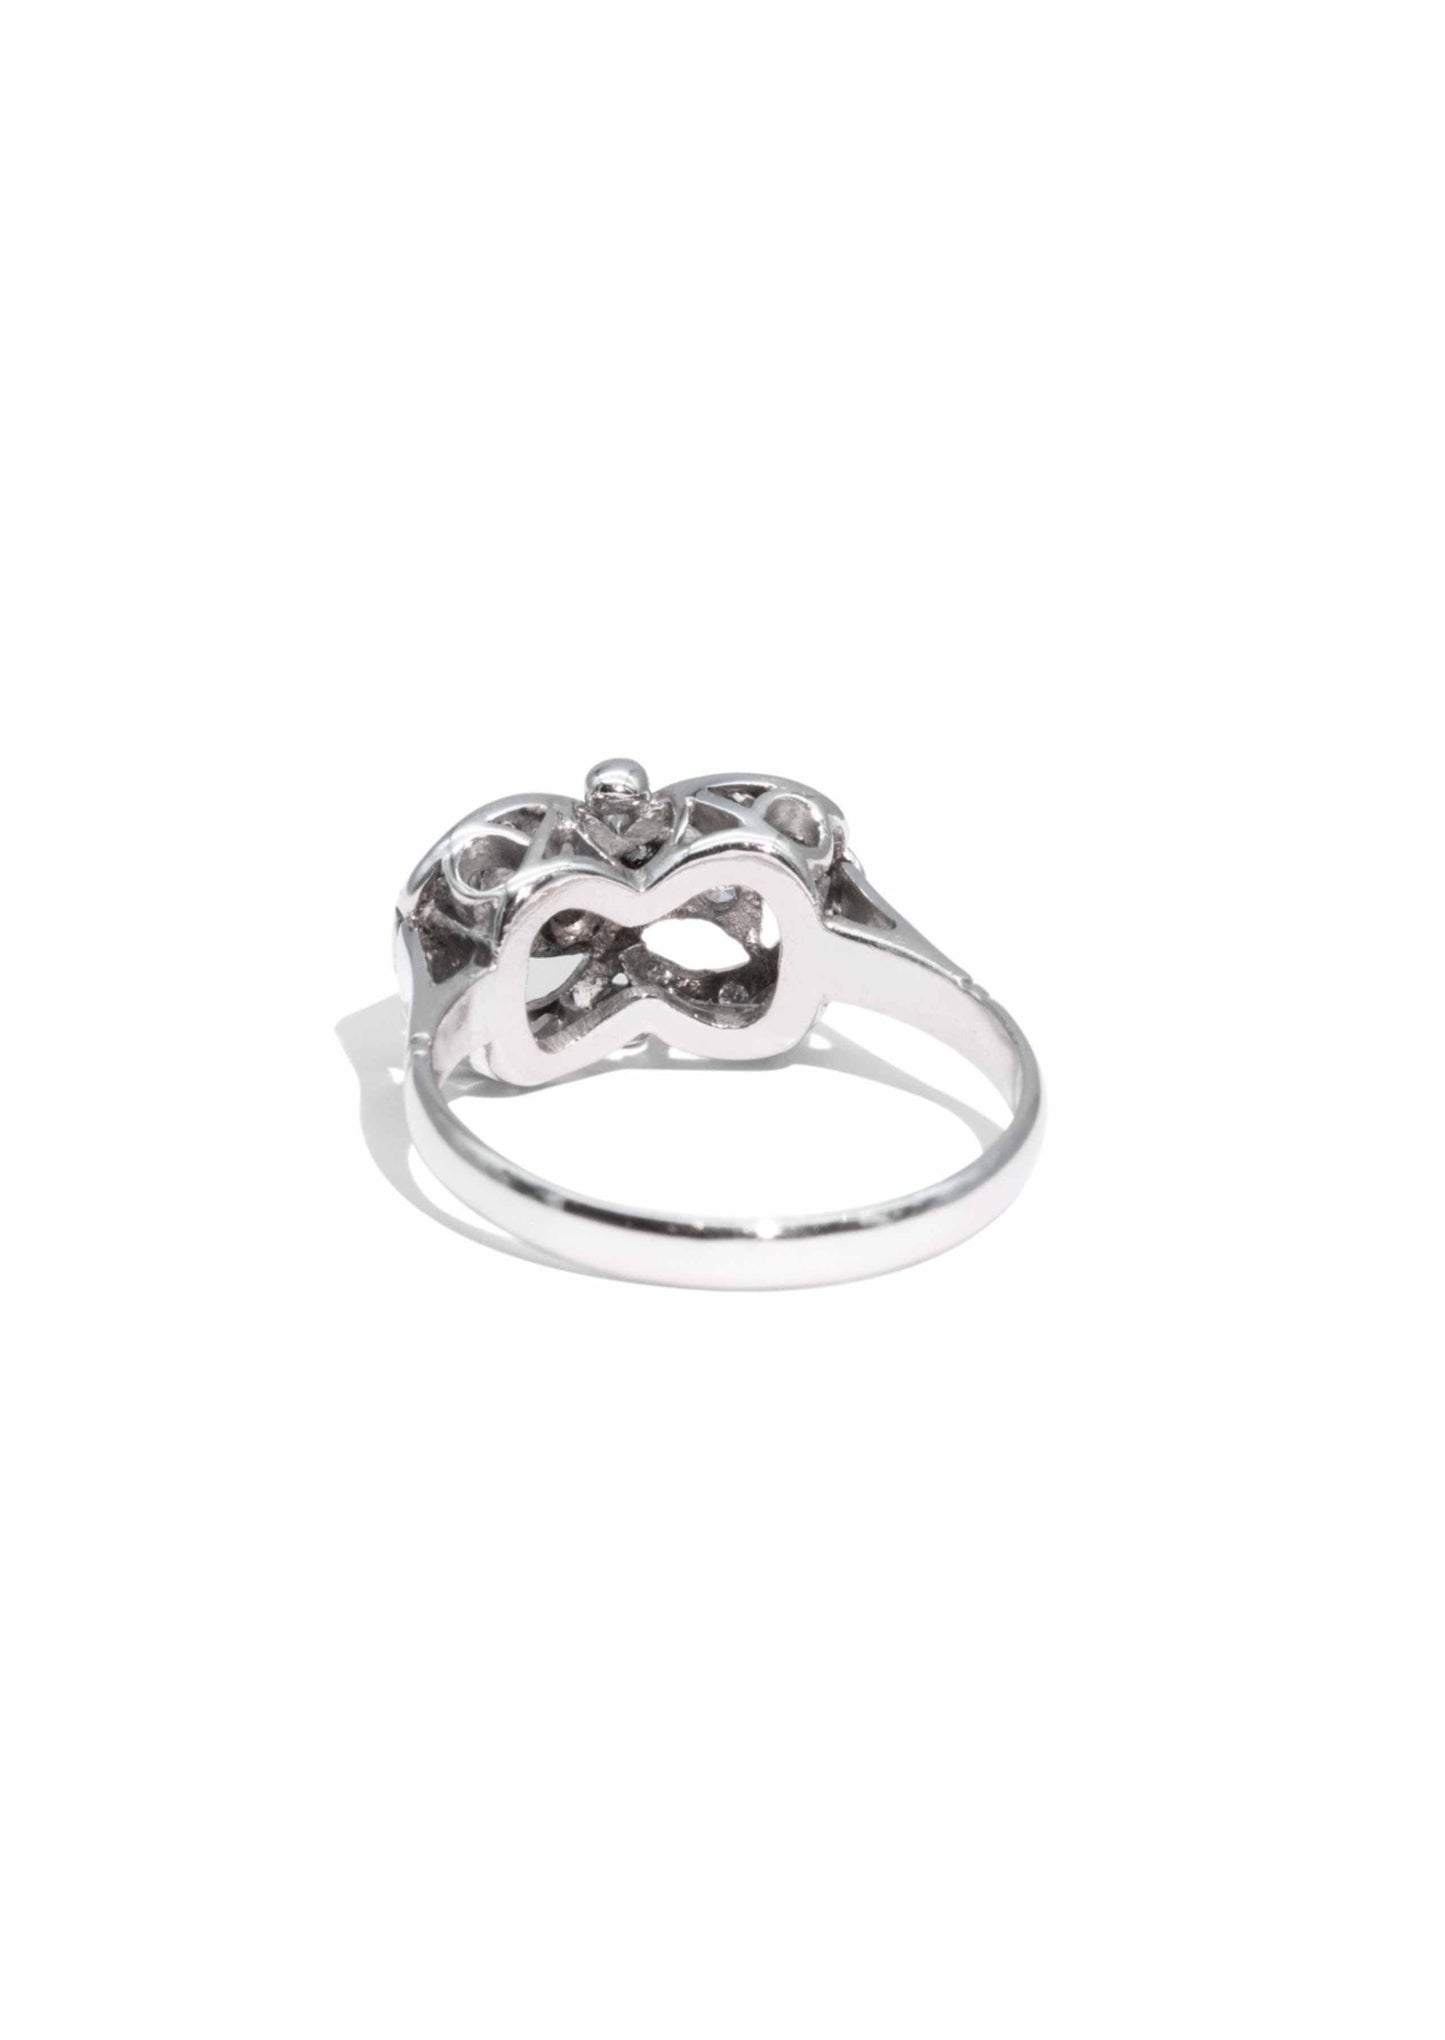 The Cleo Vintage Diamond Ring